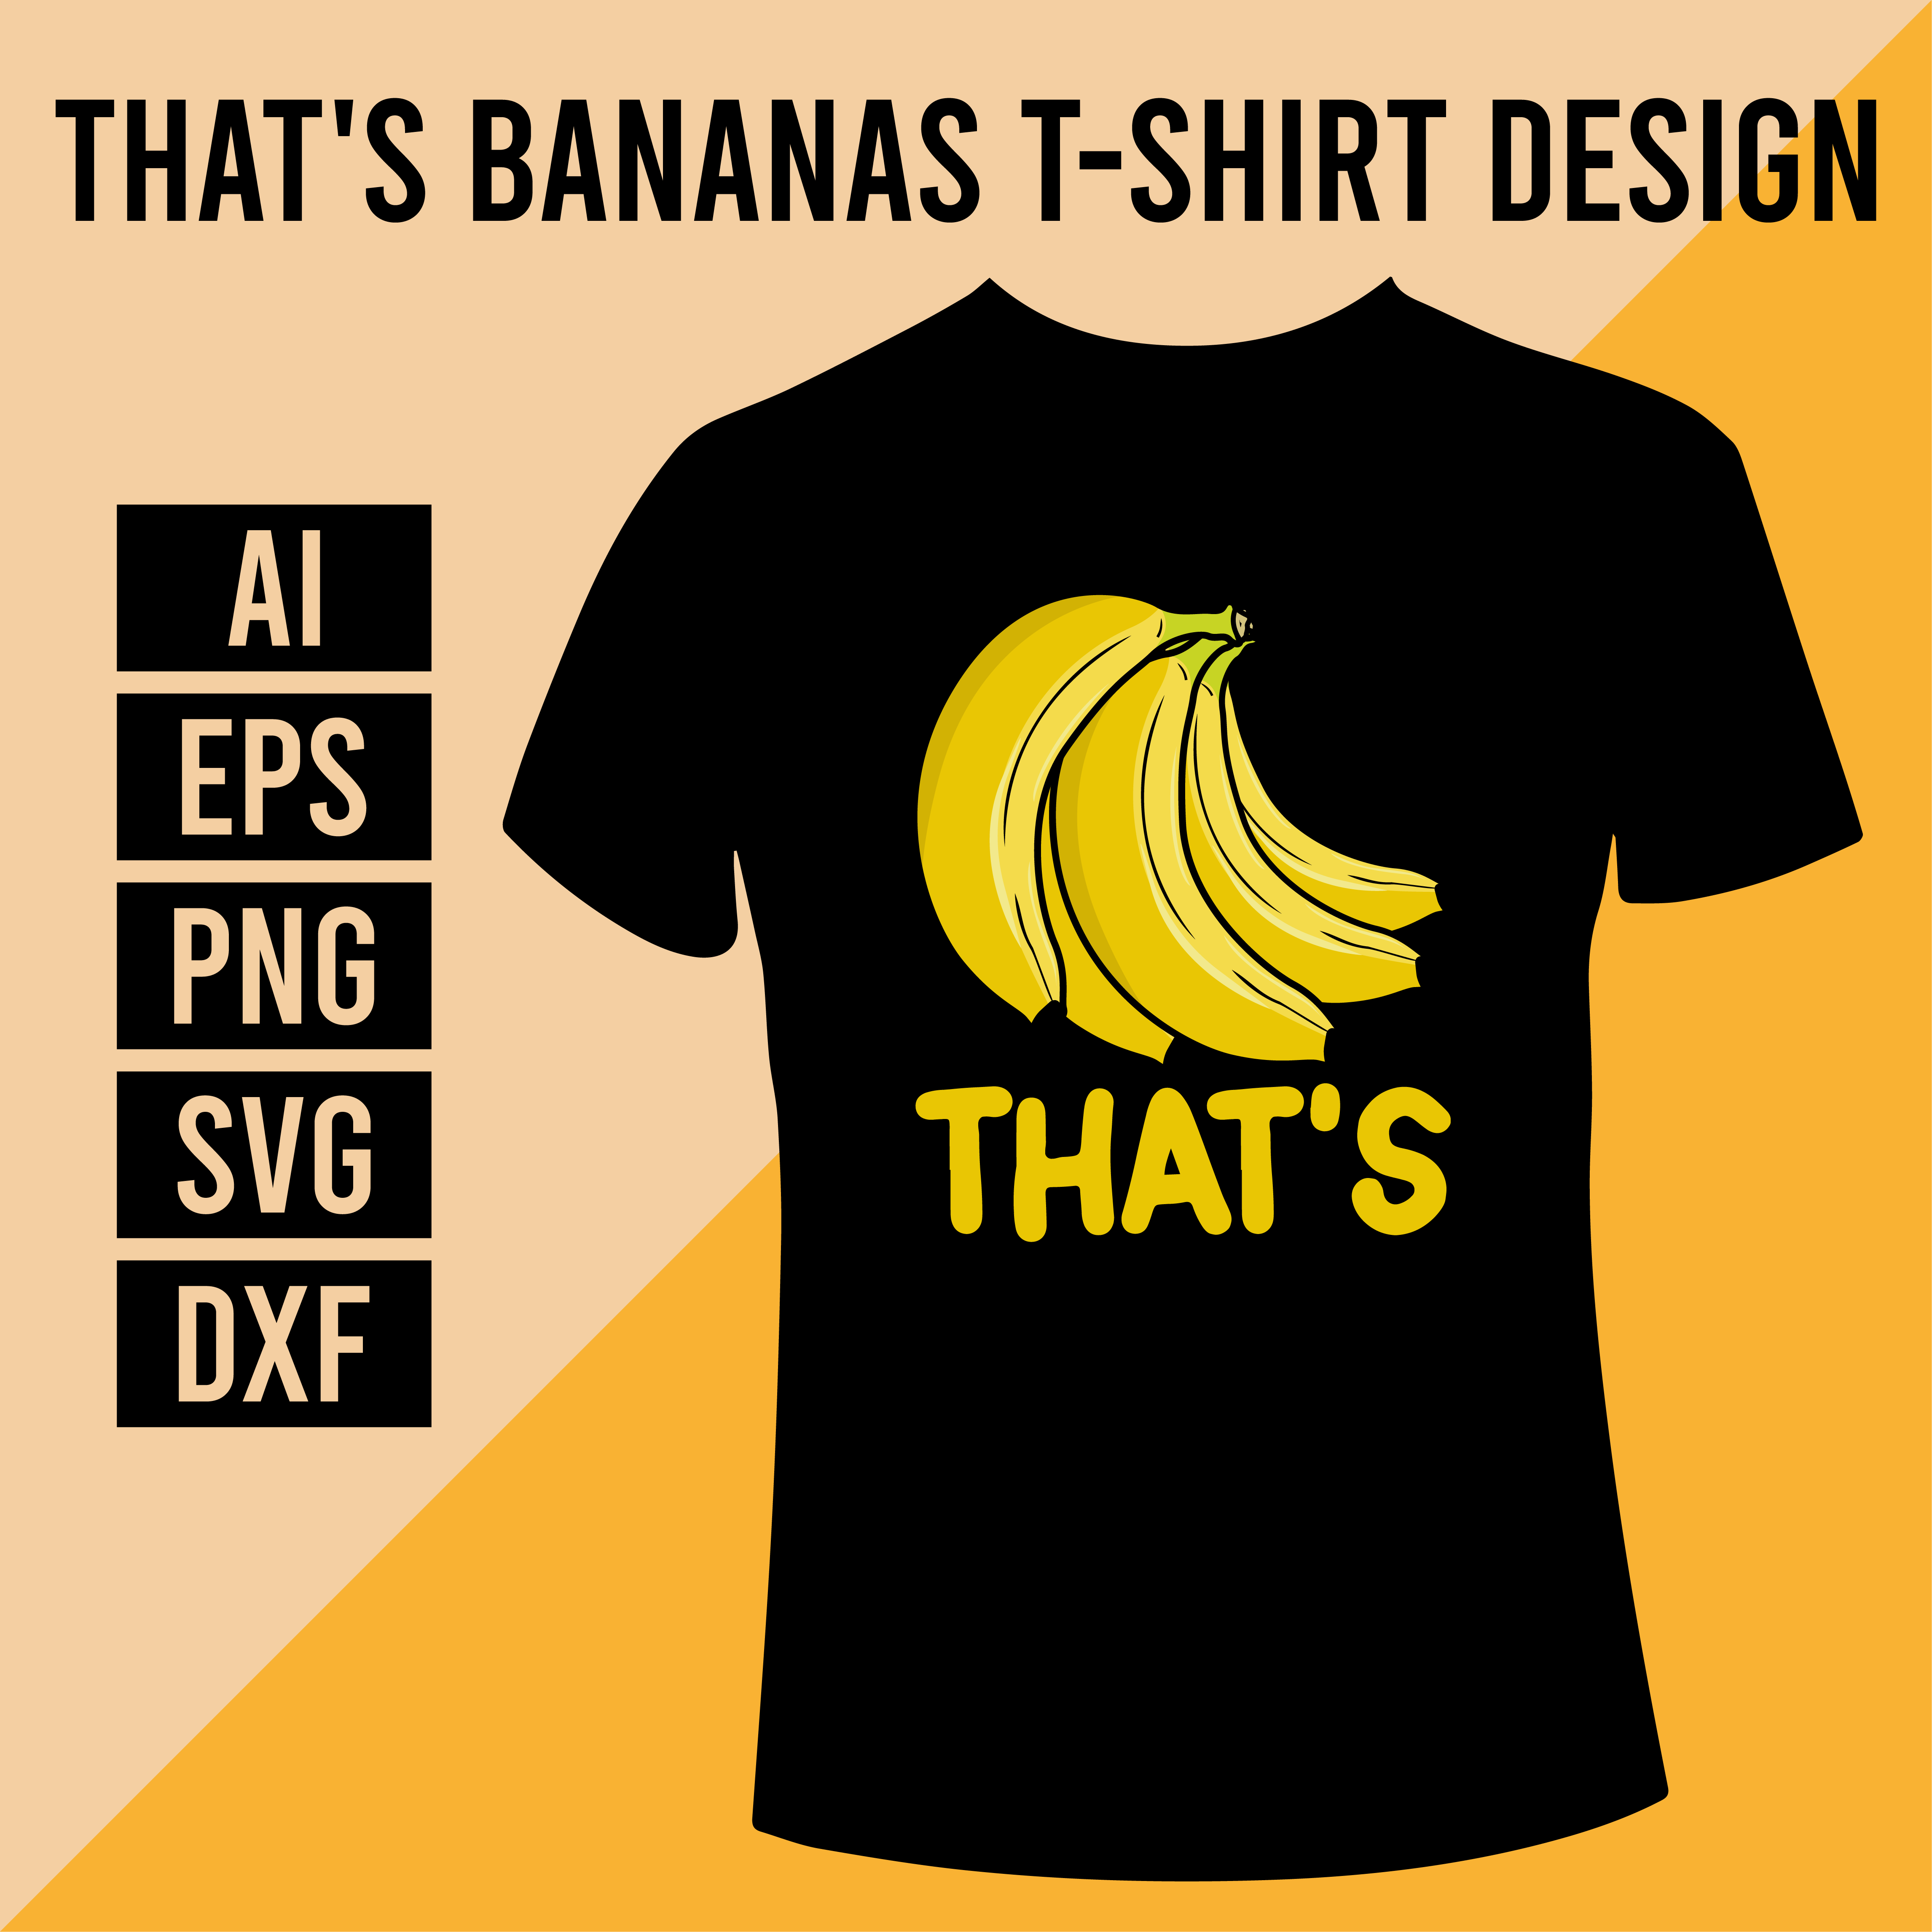 That's Bananas T-Shirt Design cover image.